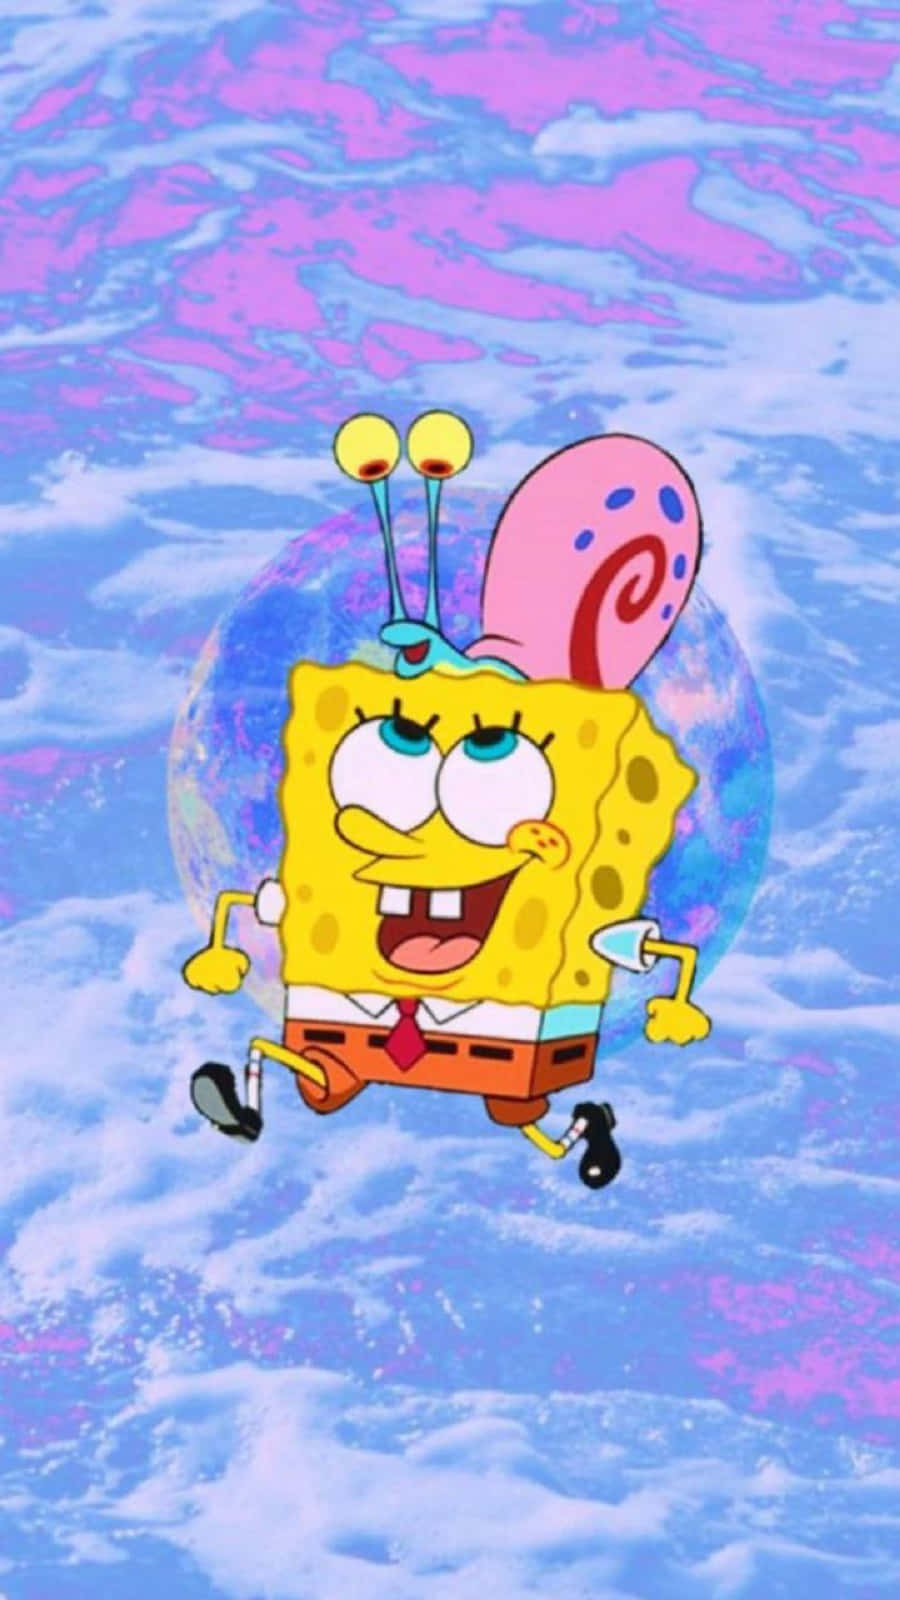 Caption: Gary the Snail - SpongeBob's Lovable Pet Wallpaper